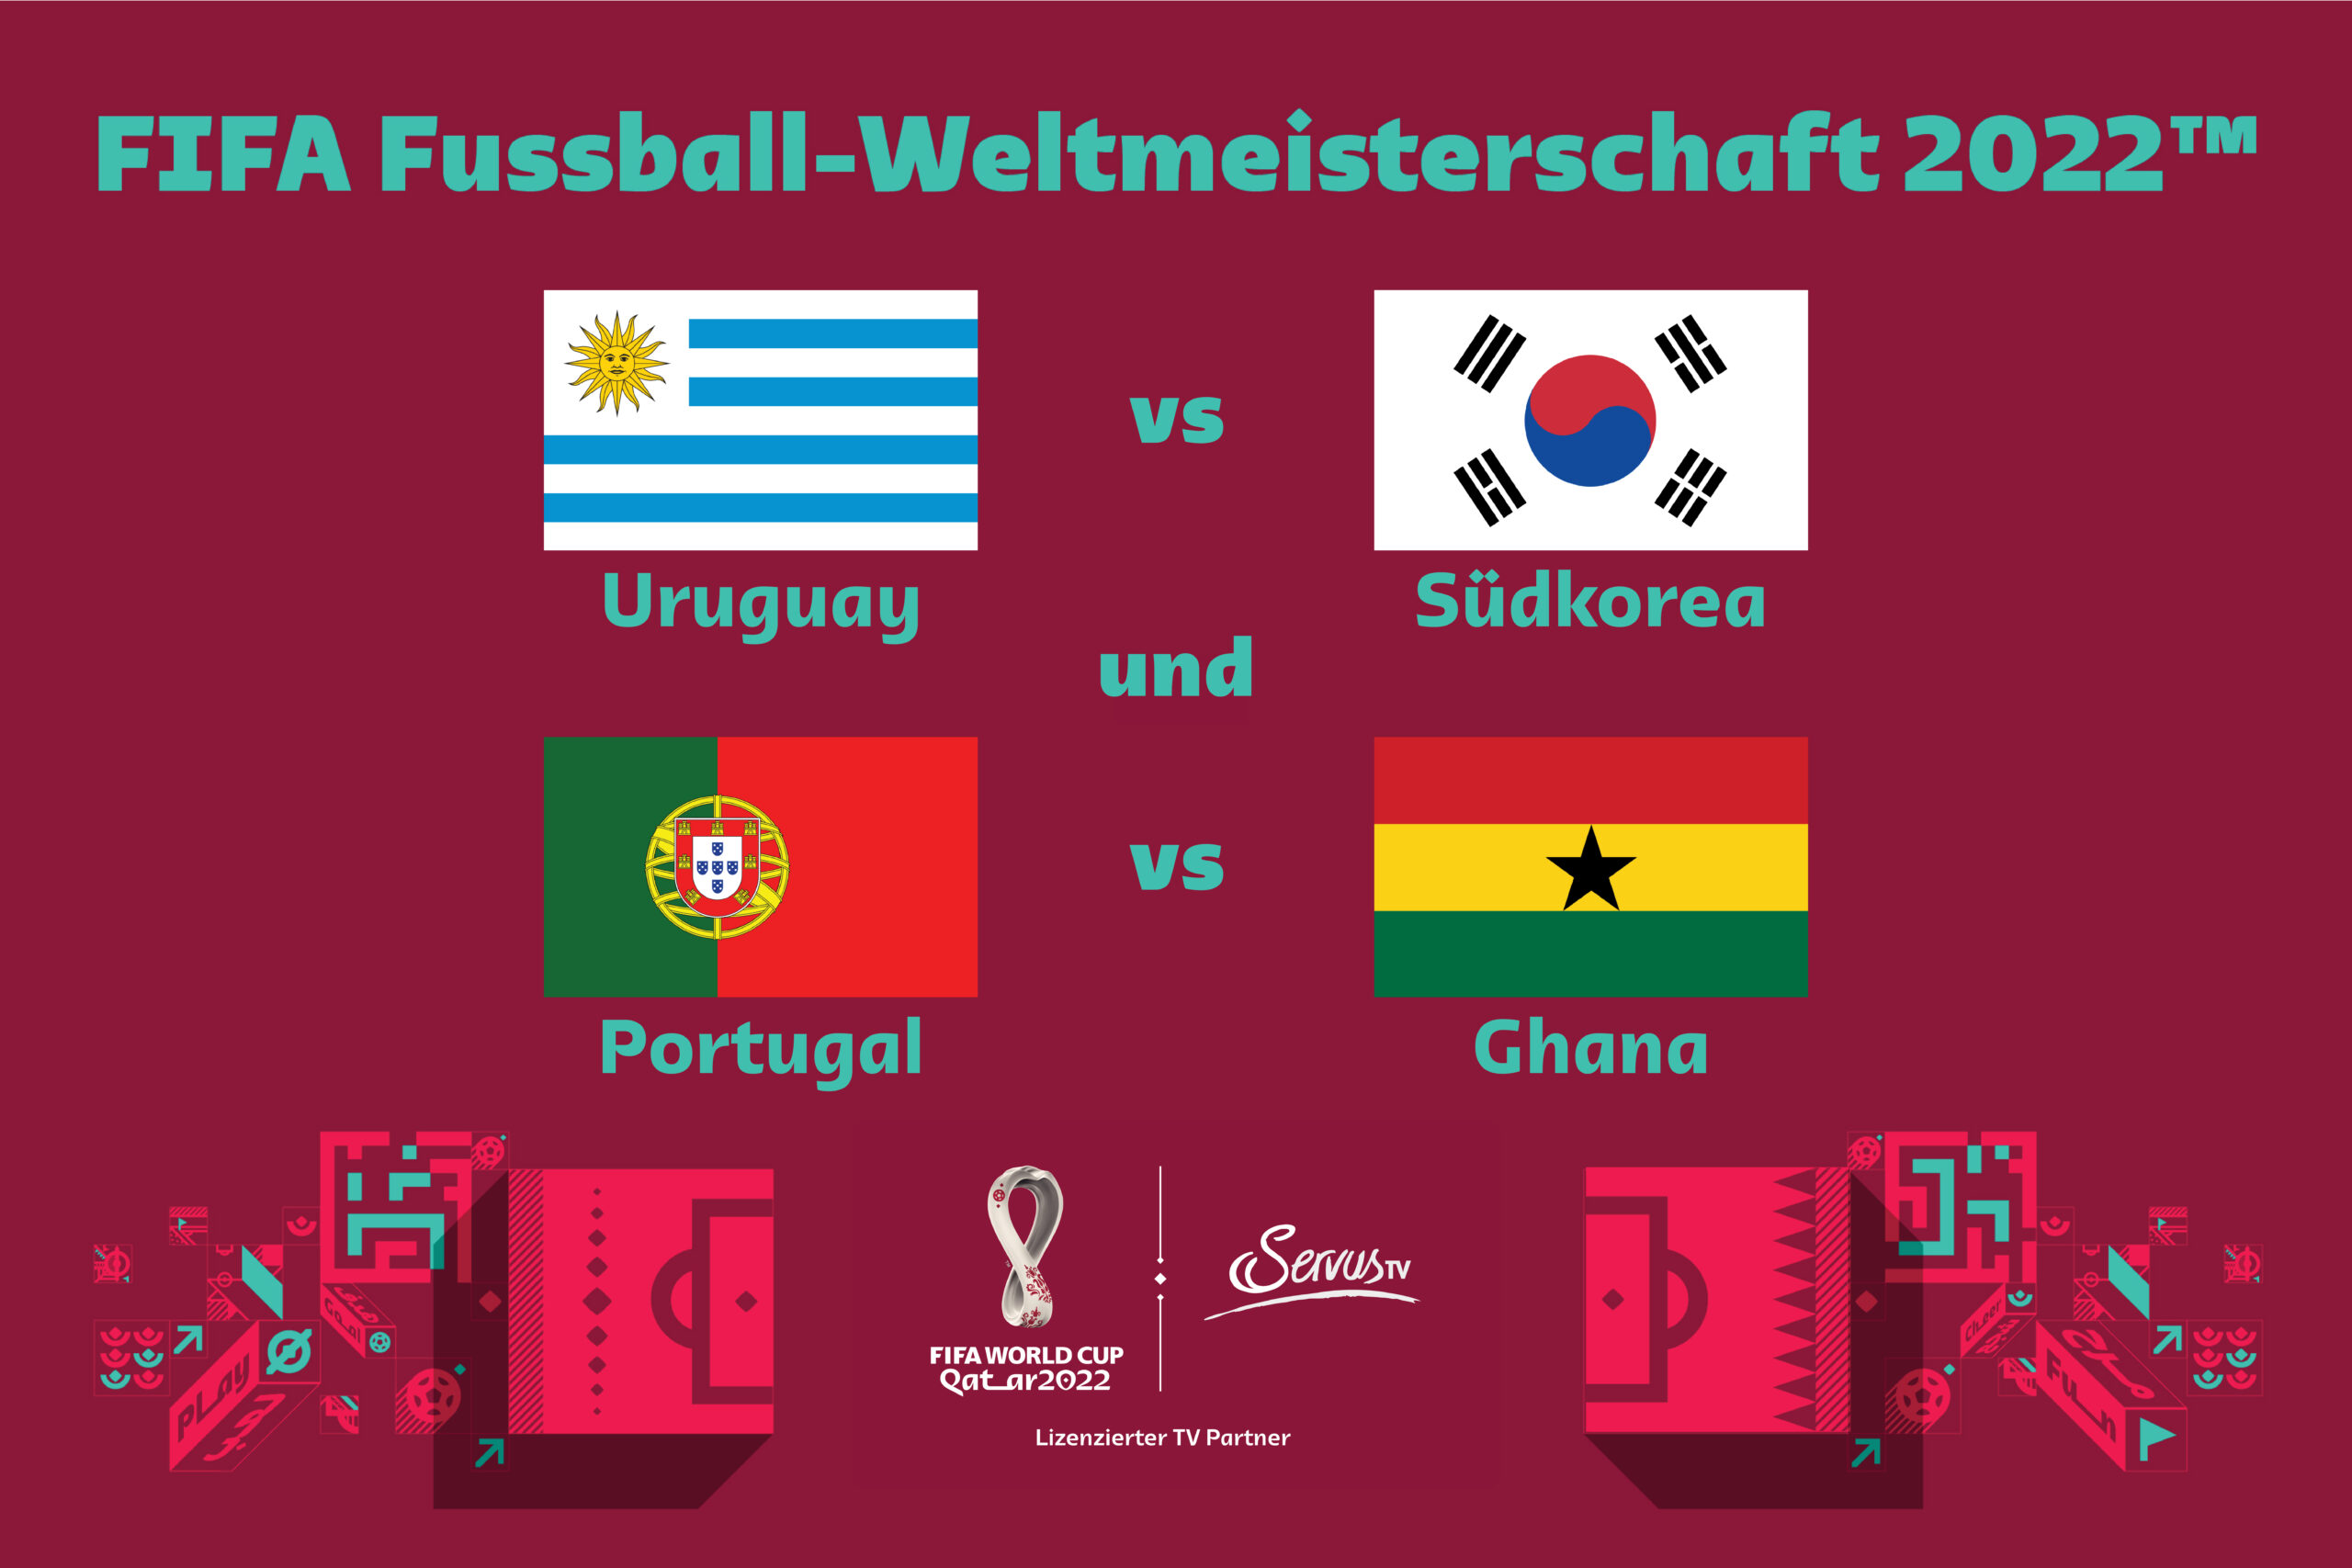 FIFA Fussball-Weltmeisterschaft: Uruguay - Südkorea und Portugal - Ghana